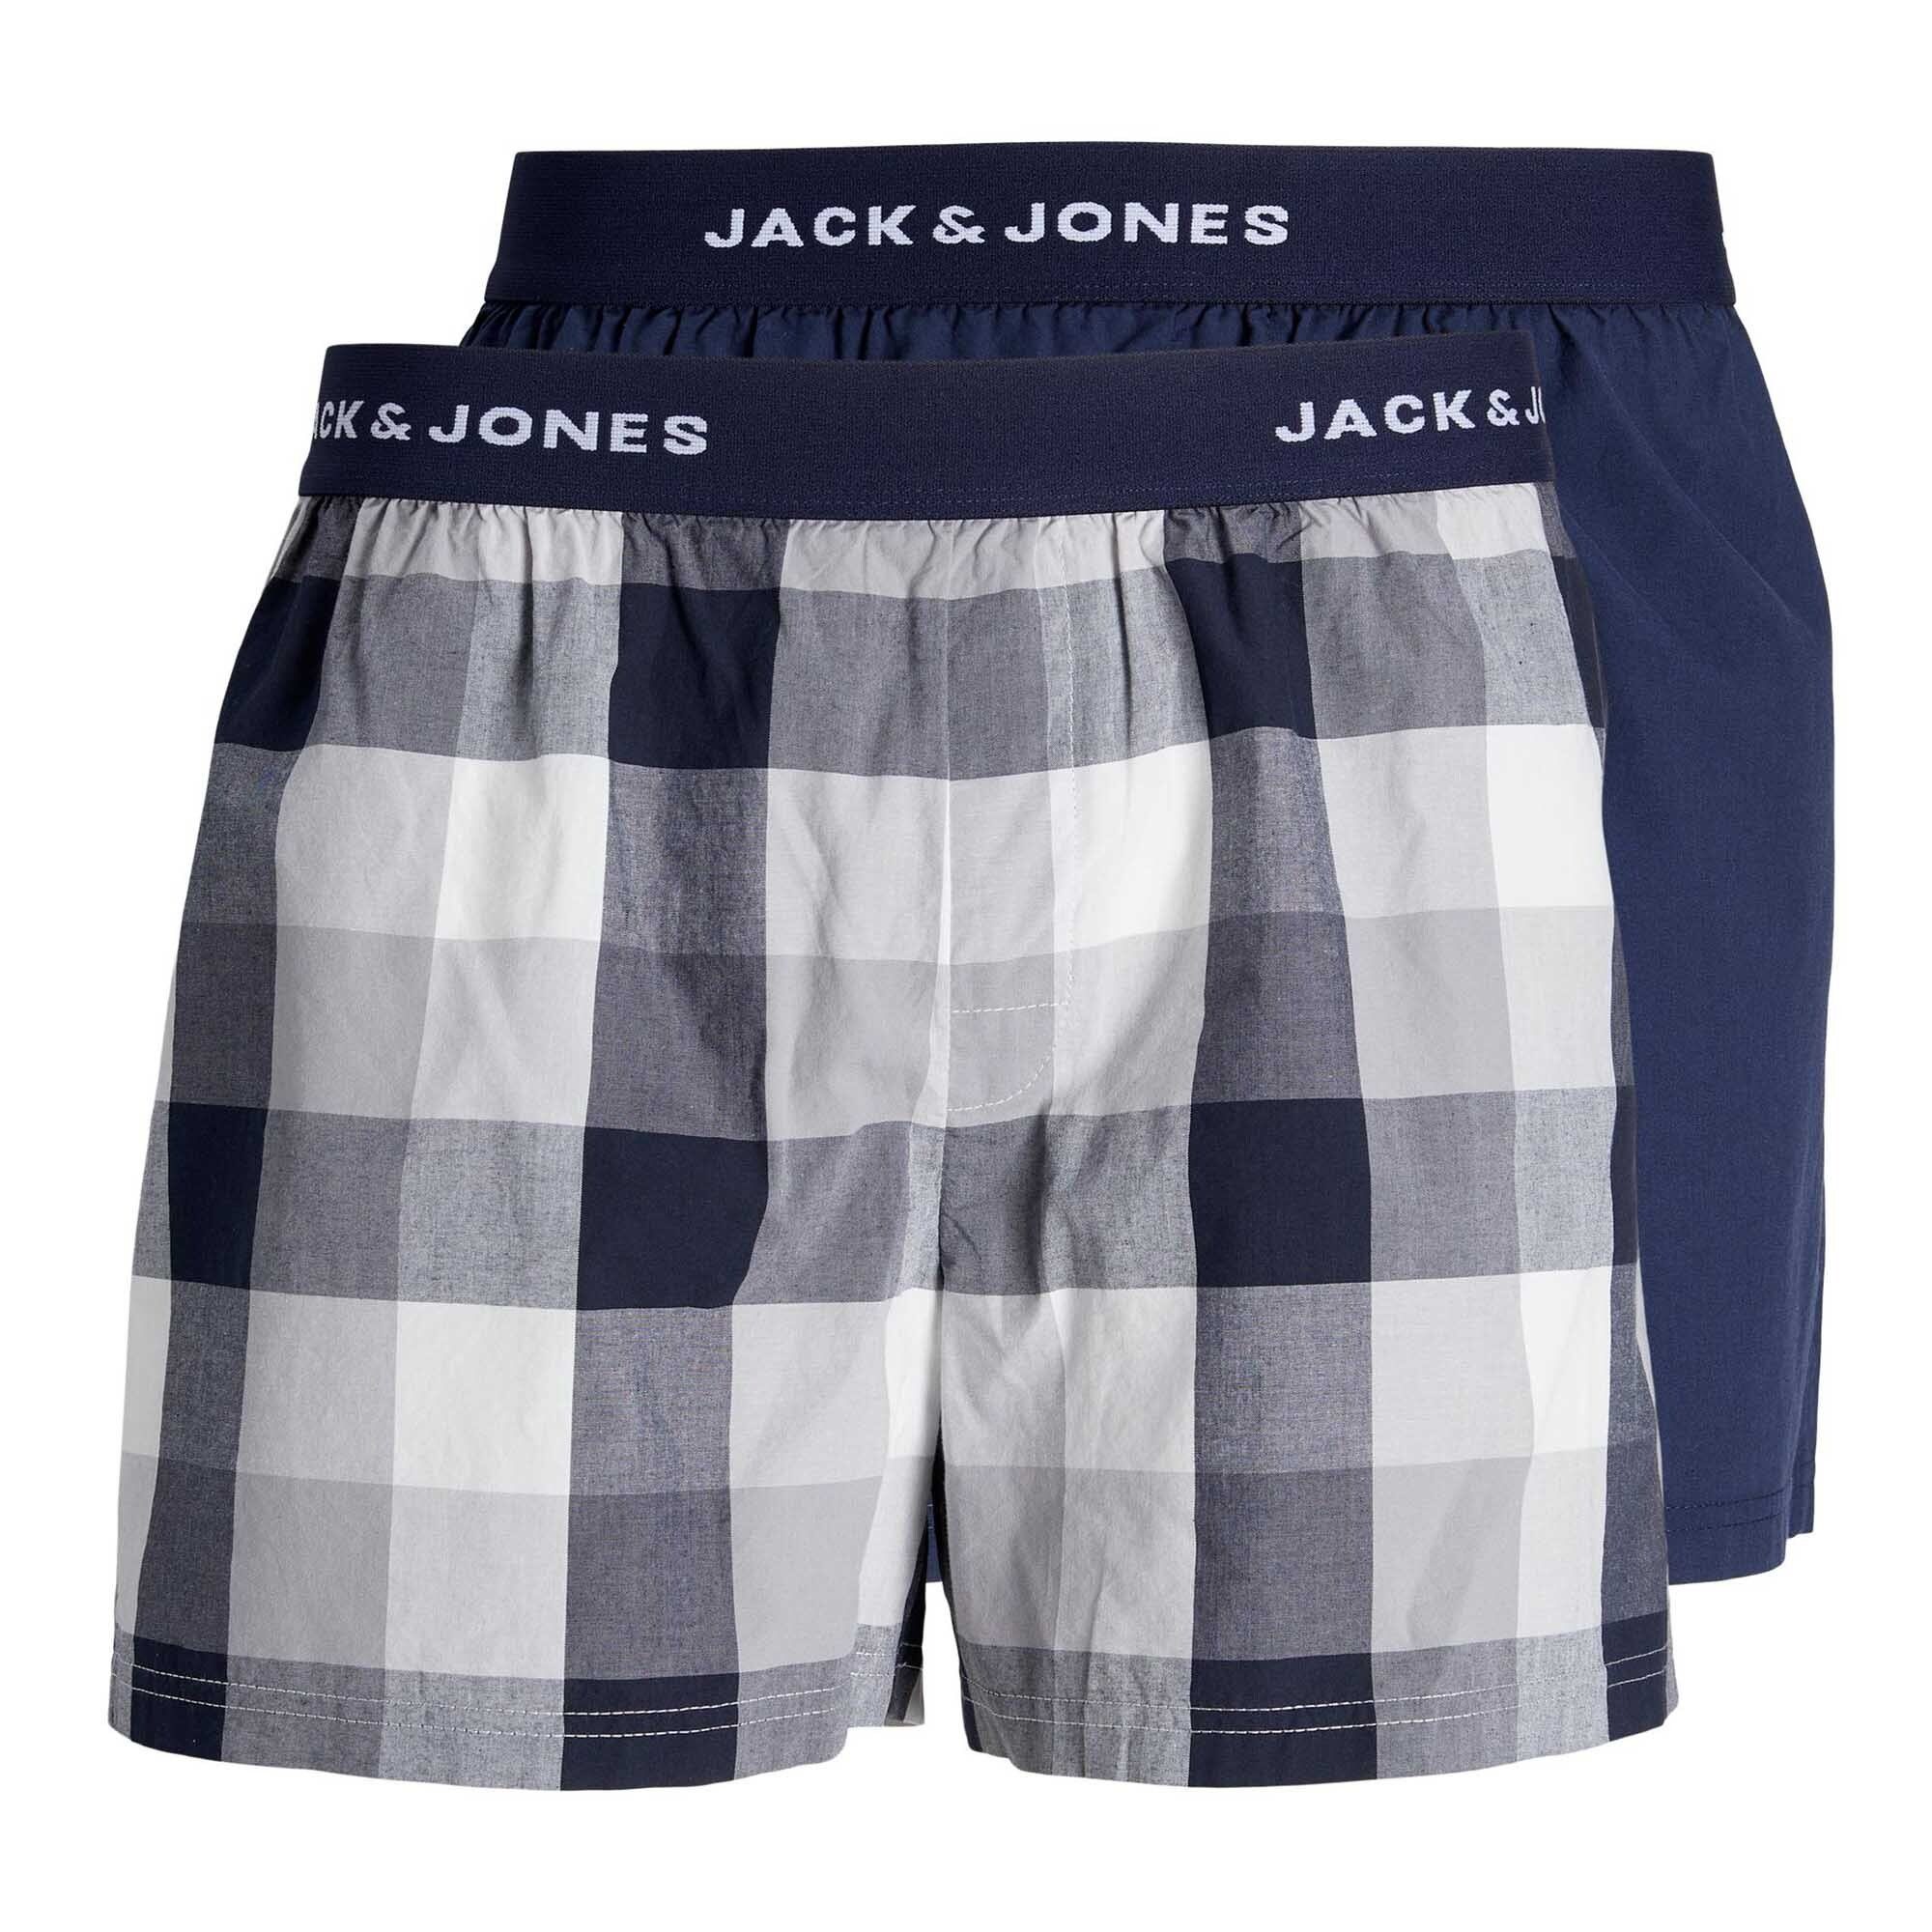 Jack & Jones Boxershorts Herren Web-Boxershorts 2er Pack - JACLUCA CHECK